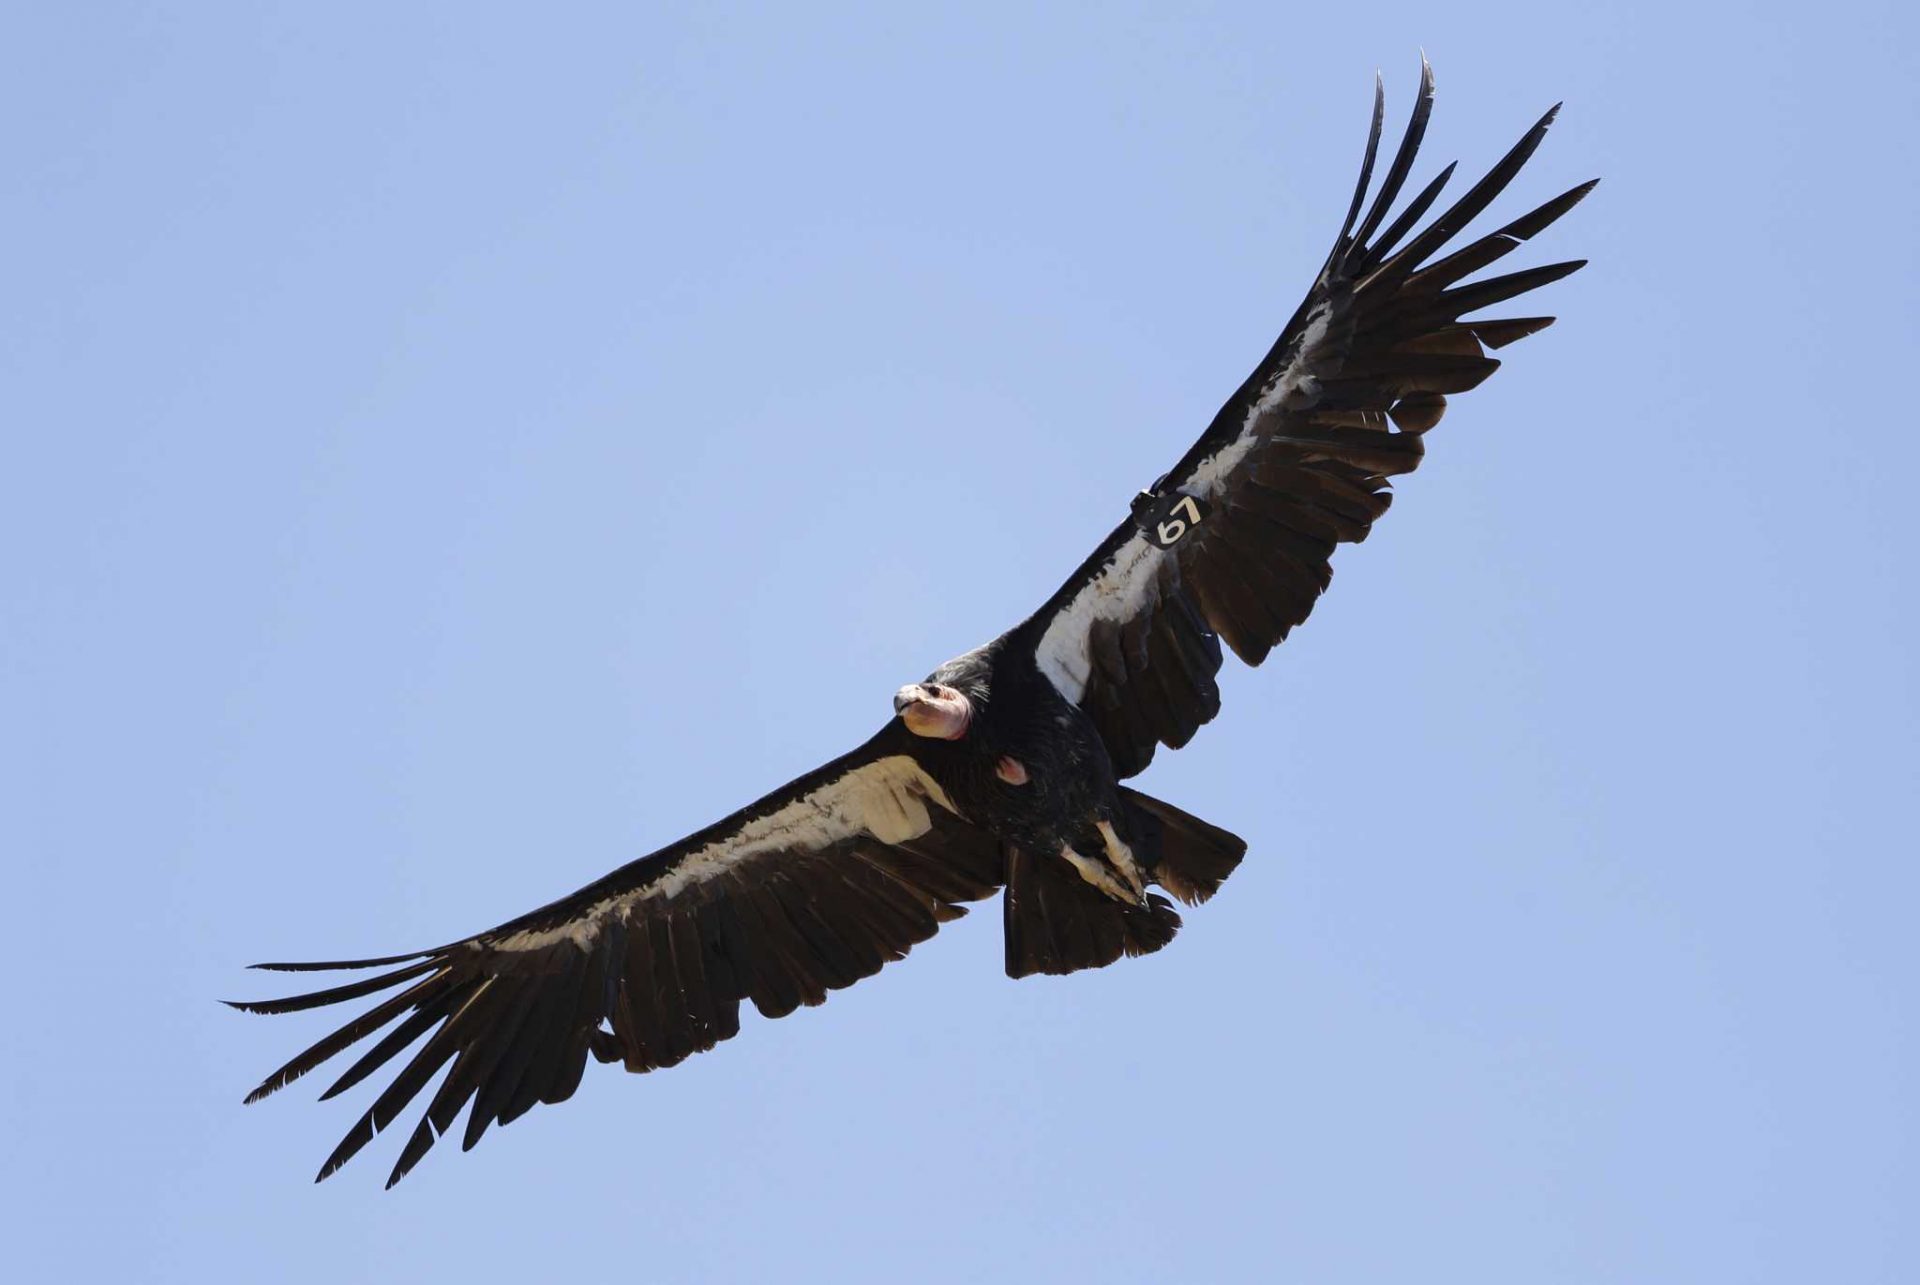 Deem about finds California condors can win “virgin births”